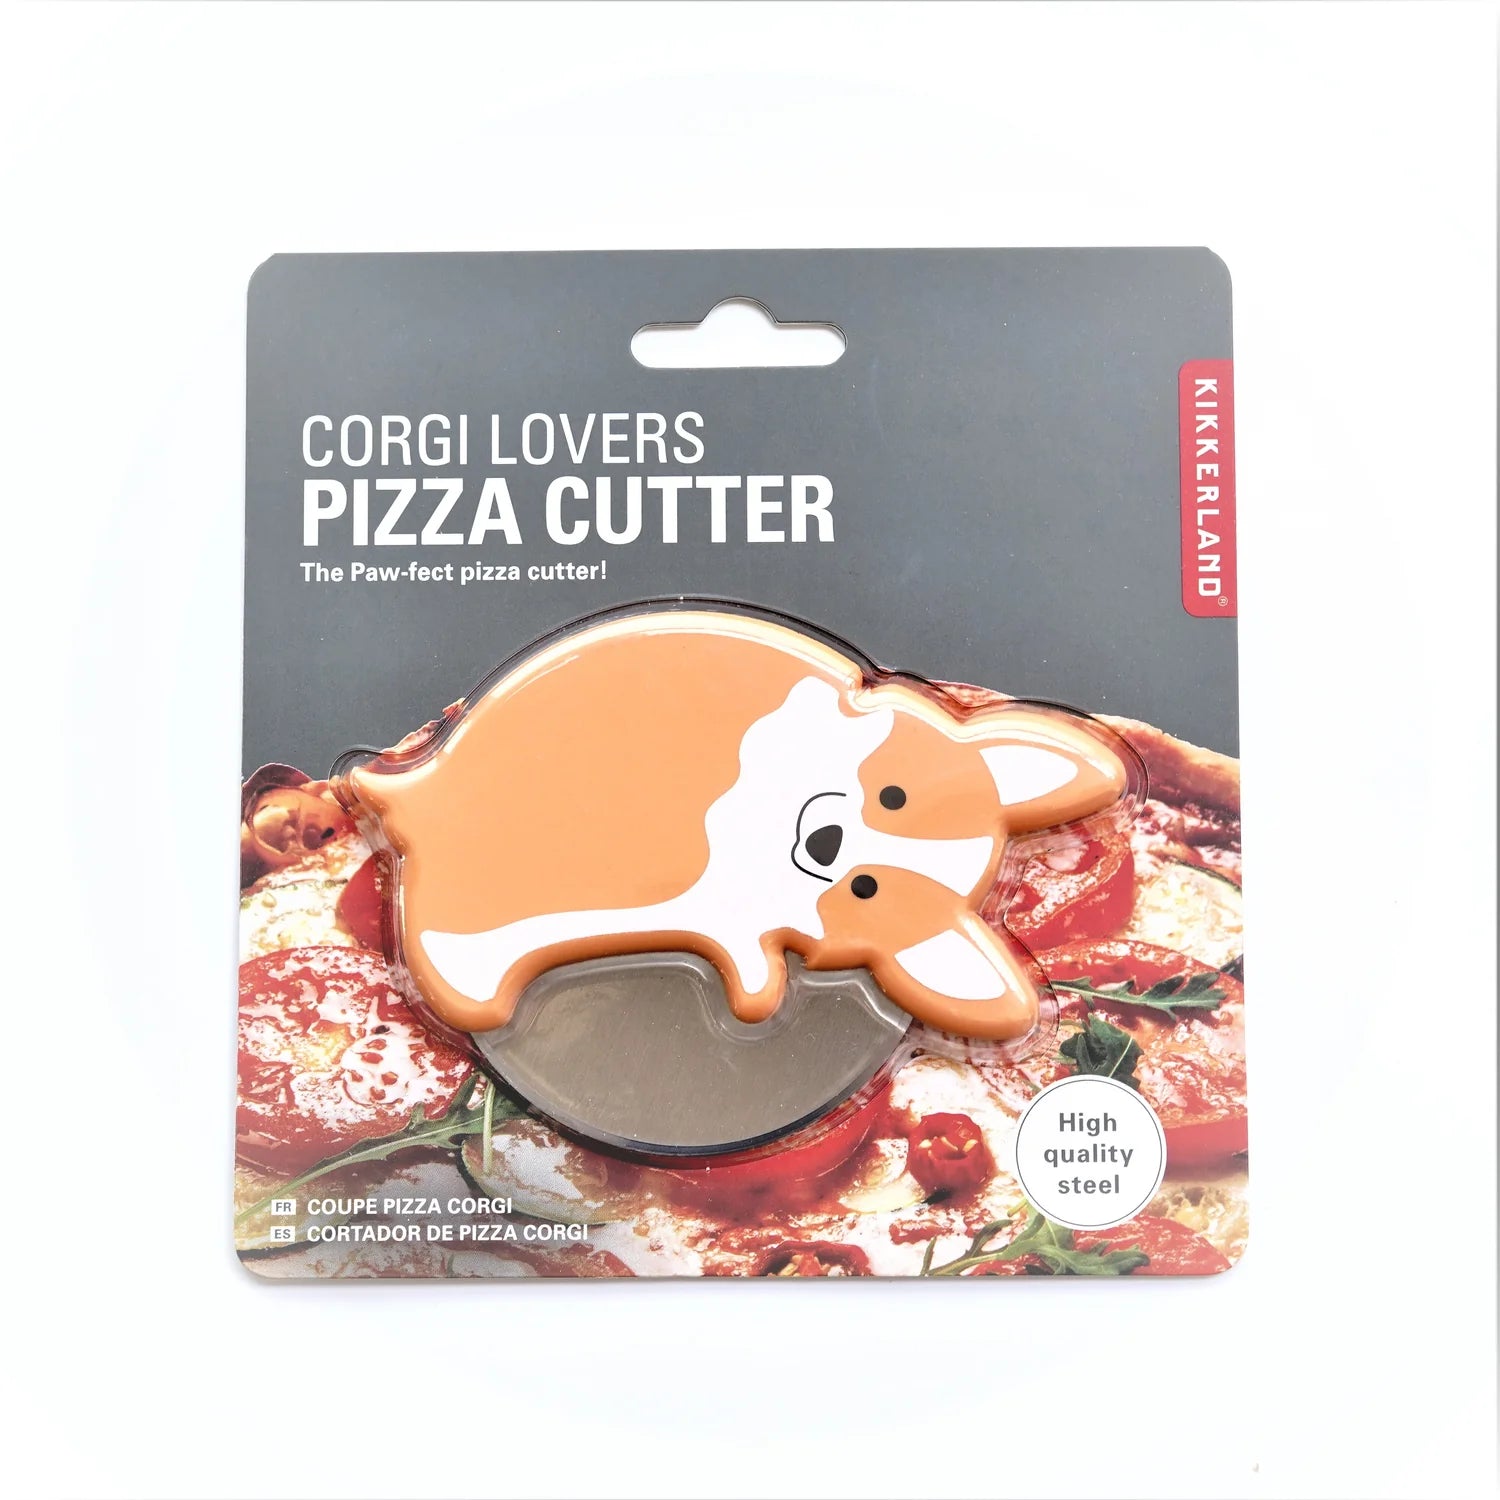 Fabulous Gifts Kikkerland Corgi Lovers Pizza Cutter by Weirs of Baggot Street